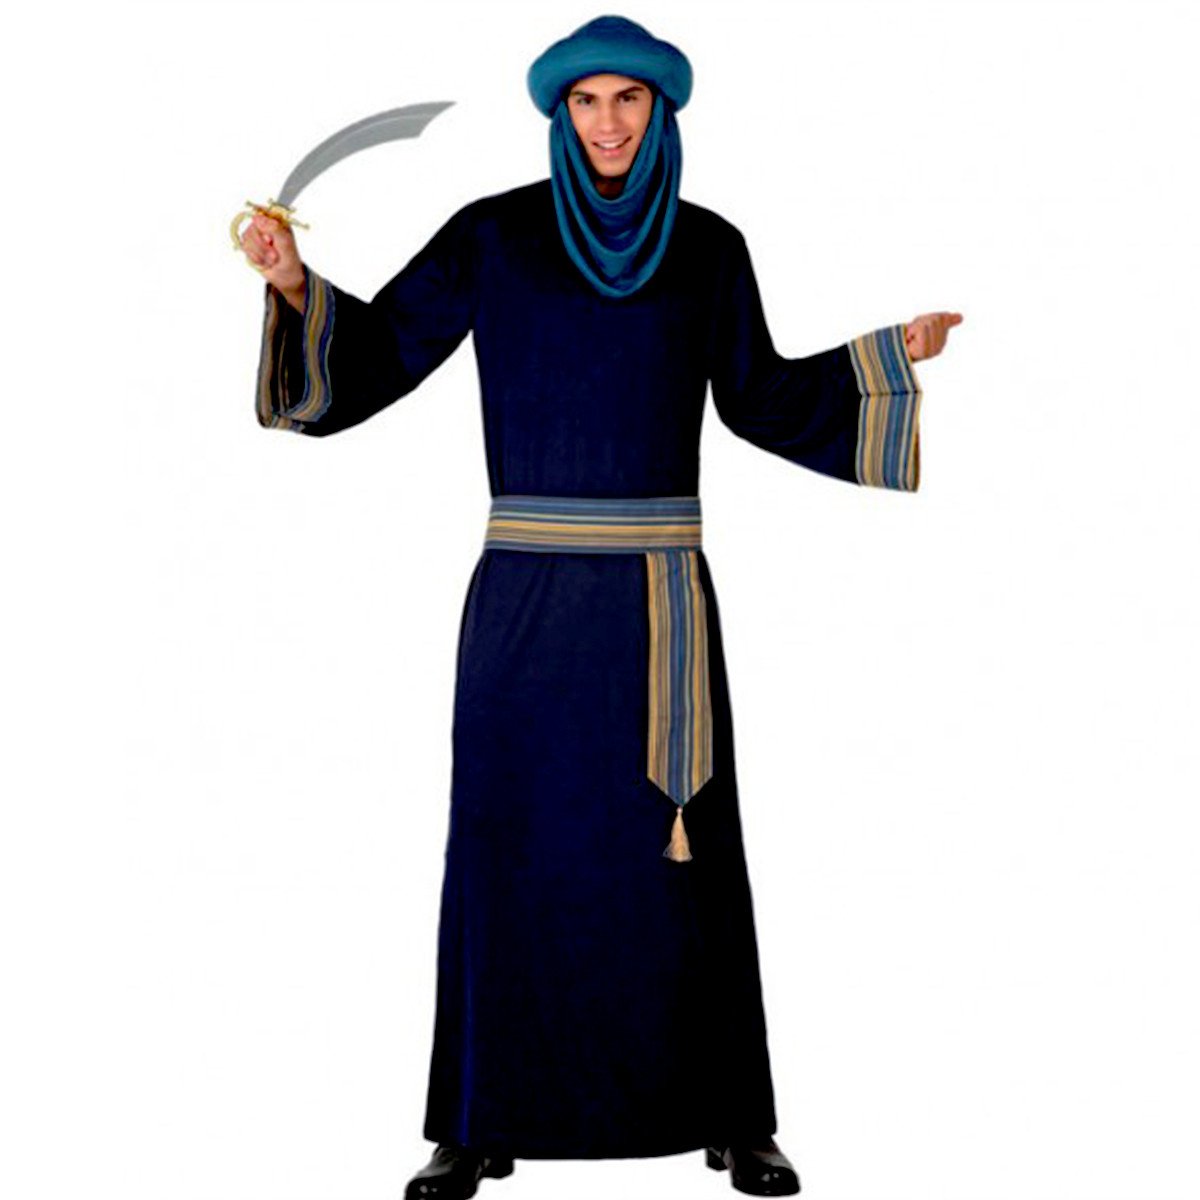 Costume Uomo Principe Arabo Tg 52a54